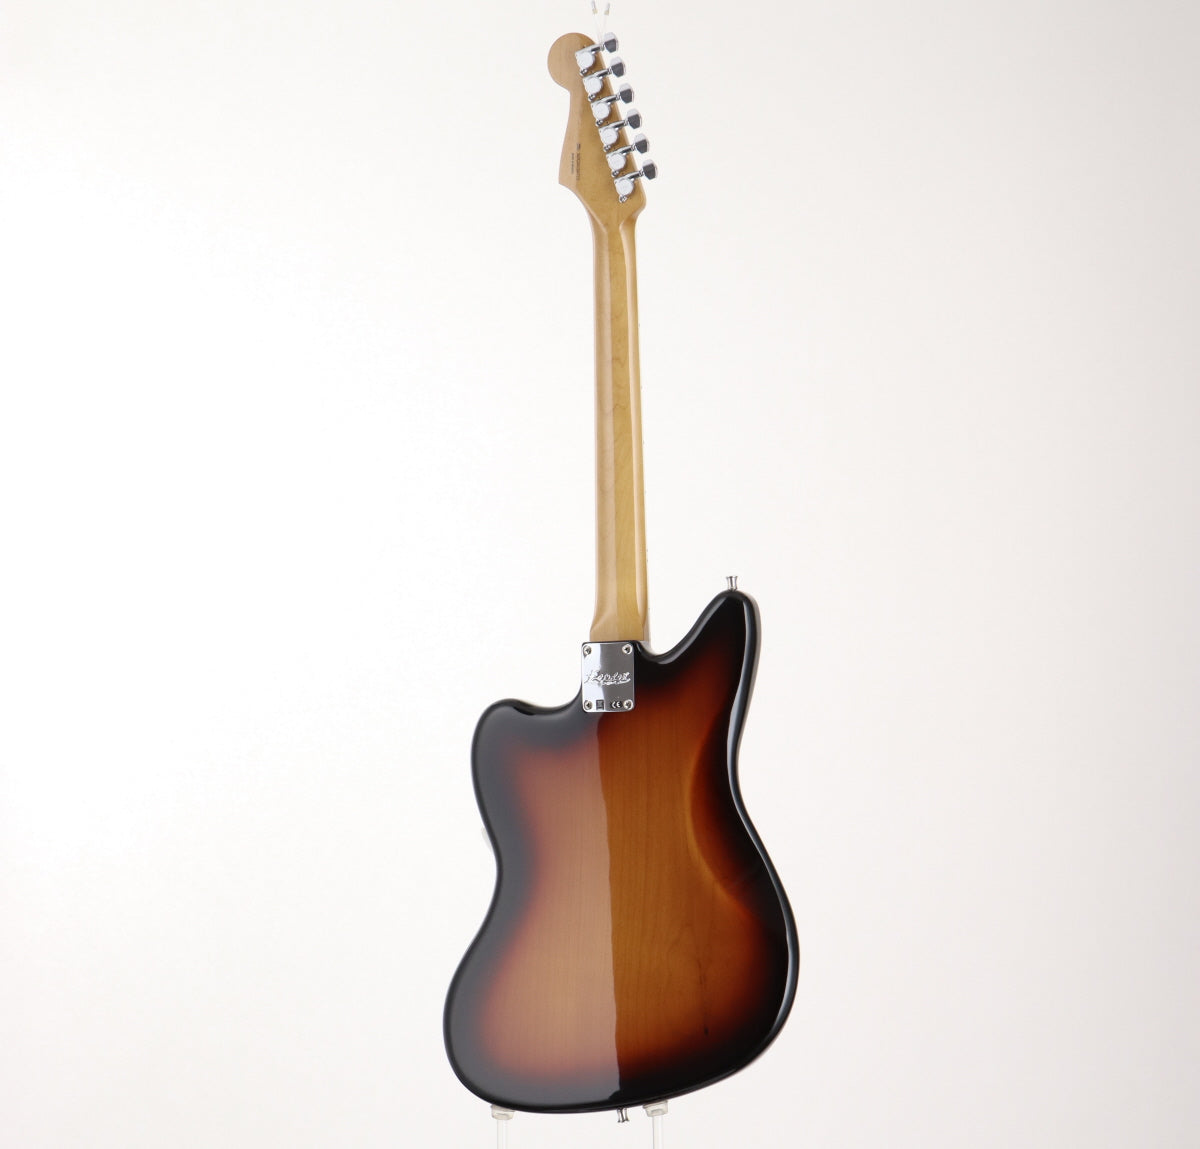 [SN MX20156723] USED Fender / Kurt Cobain Jaguar NOS 3-Color Sunburst 2020 [08]